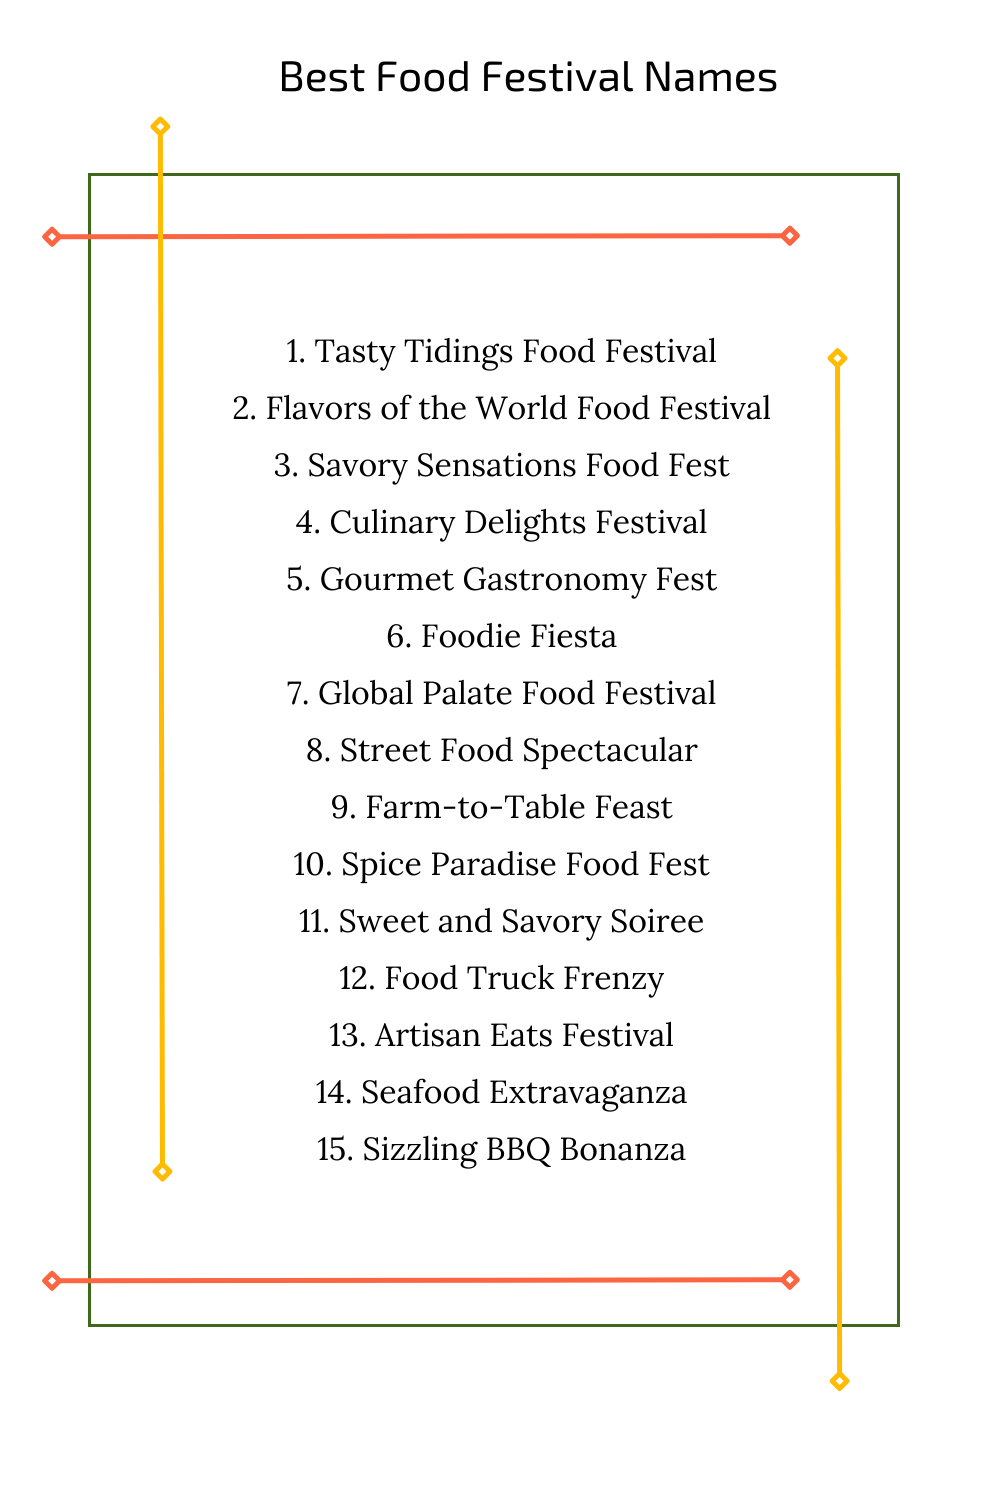 Best Food Festival Names